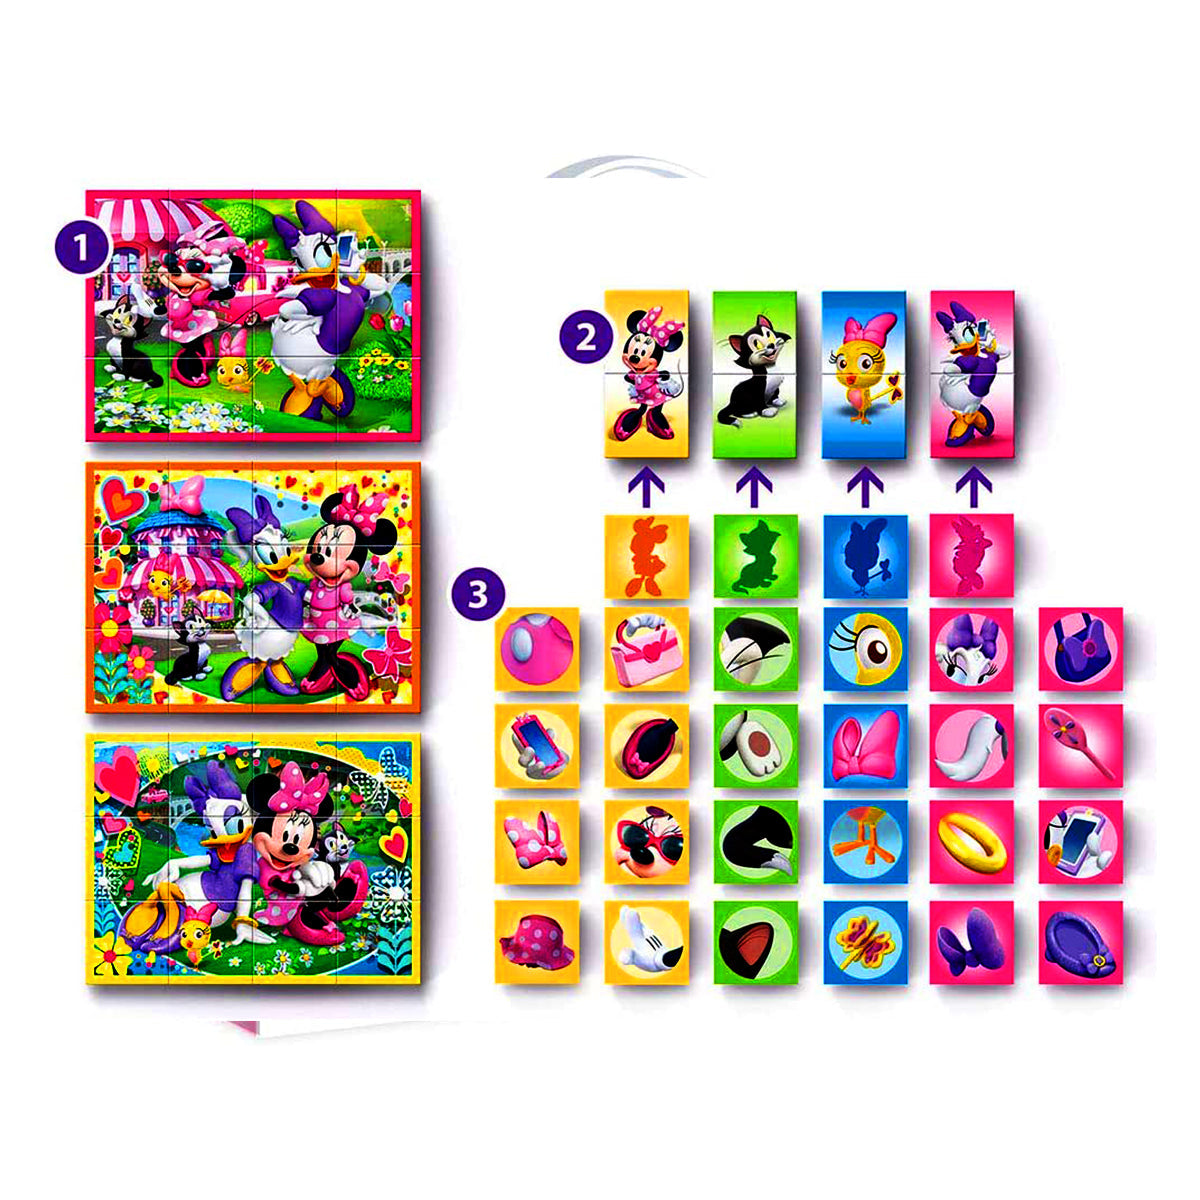 Clementoni - Multiplay Cube Puzzle - Disney Minnie - 12 Pcs